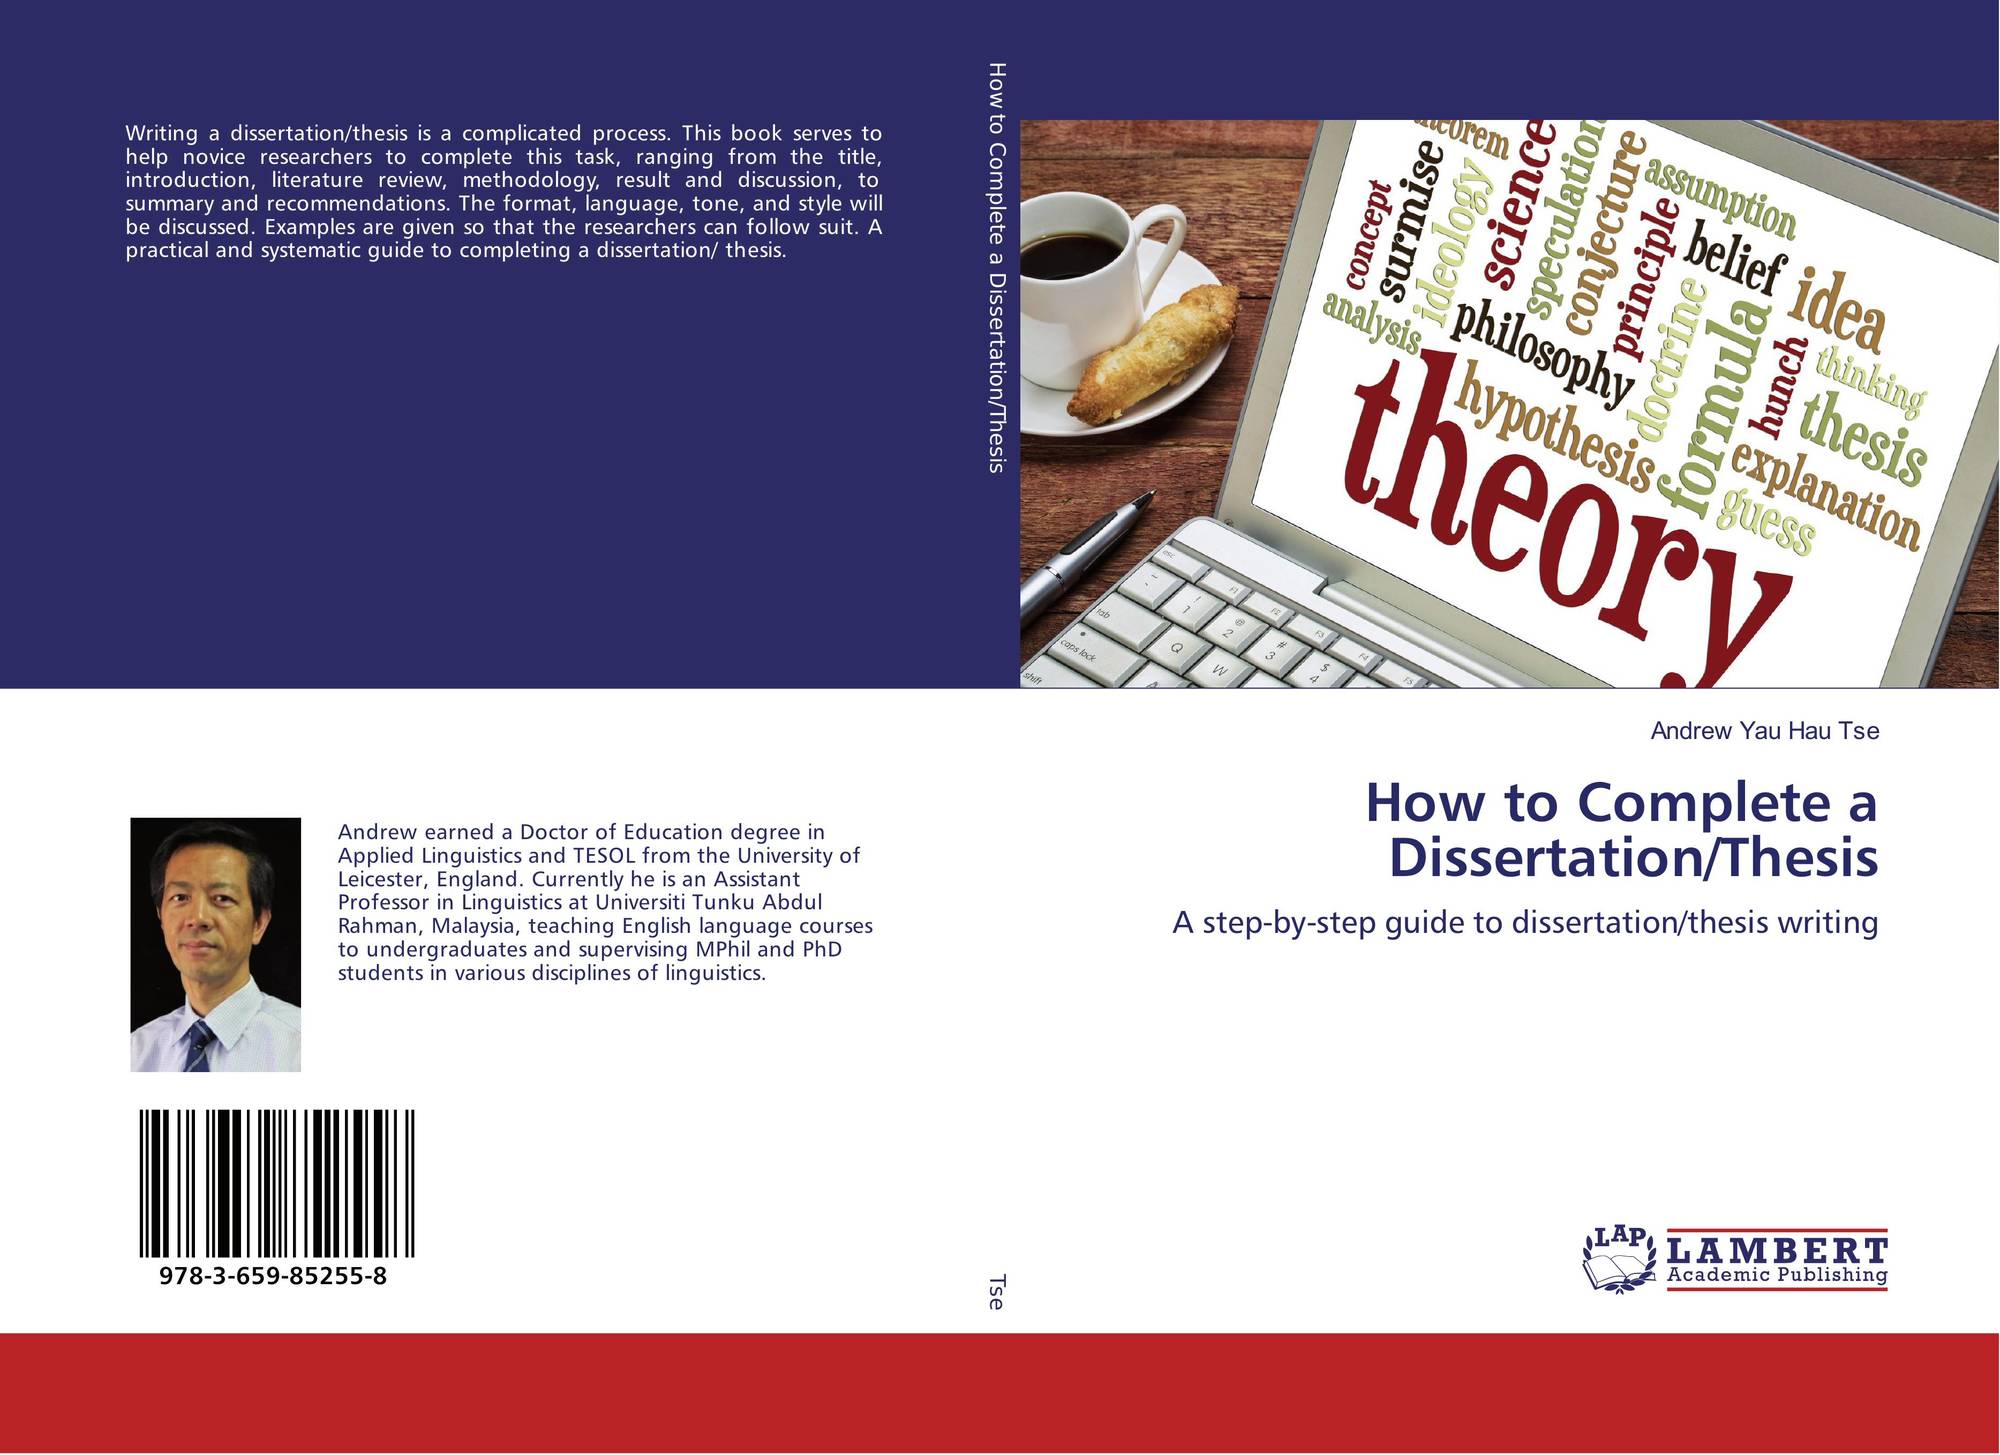 Write research dissertation proposal